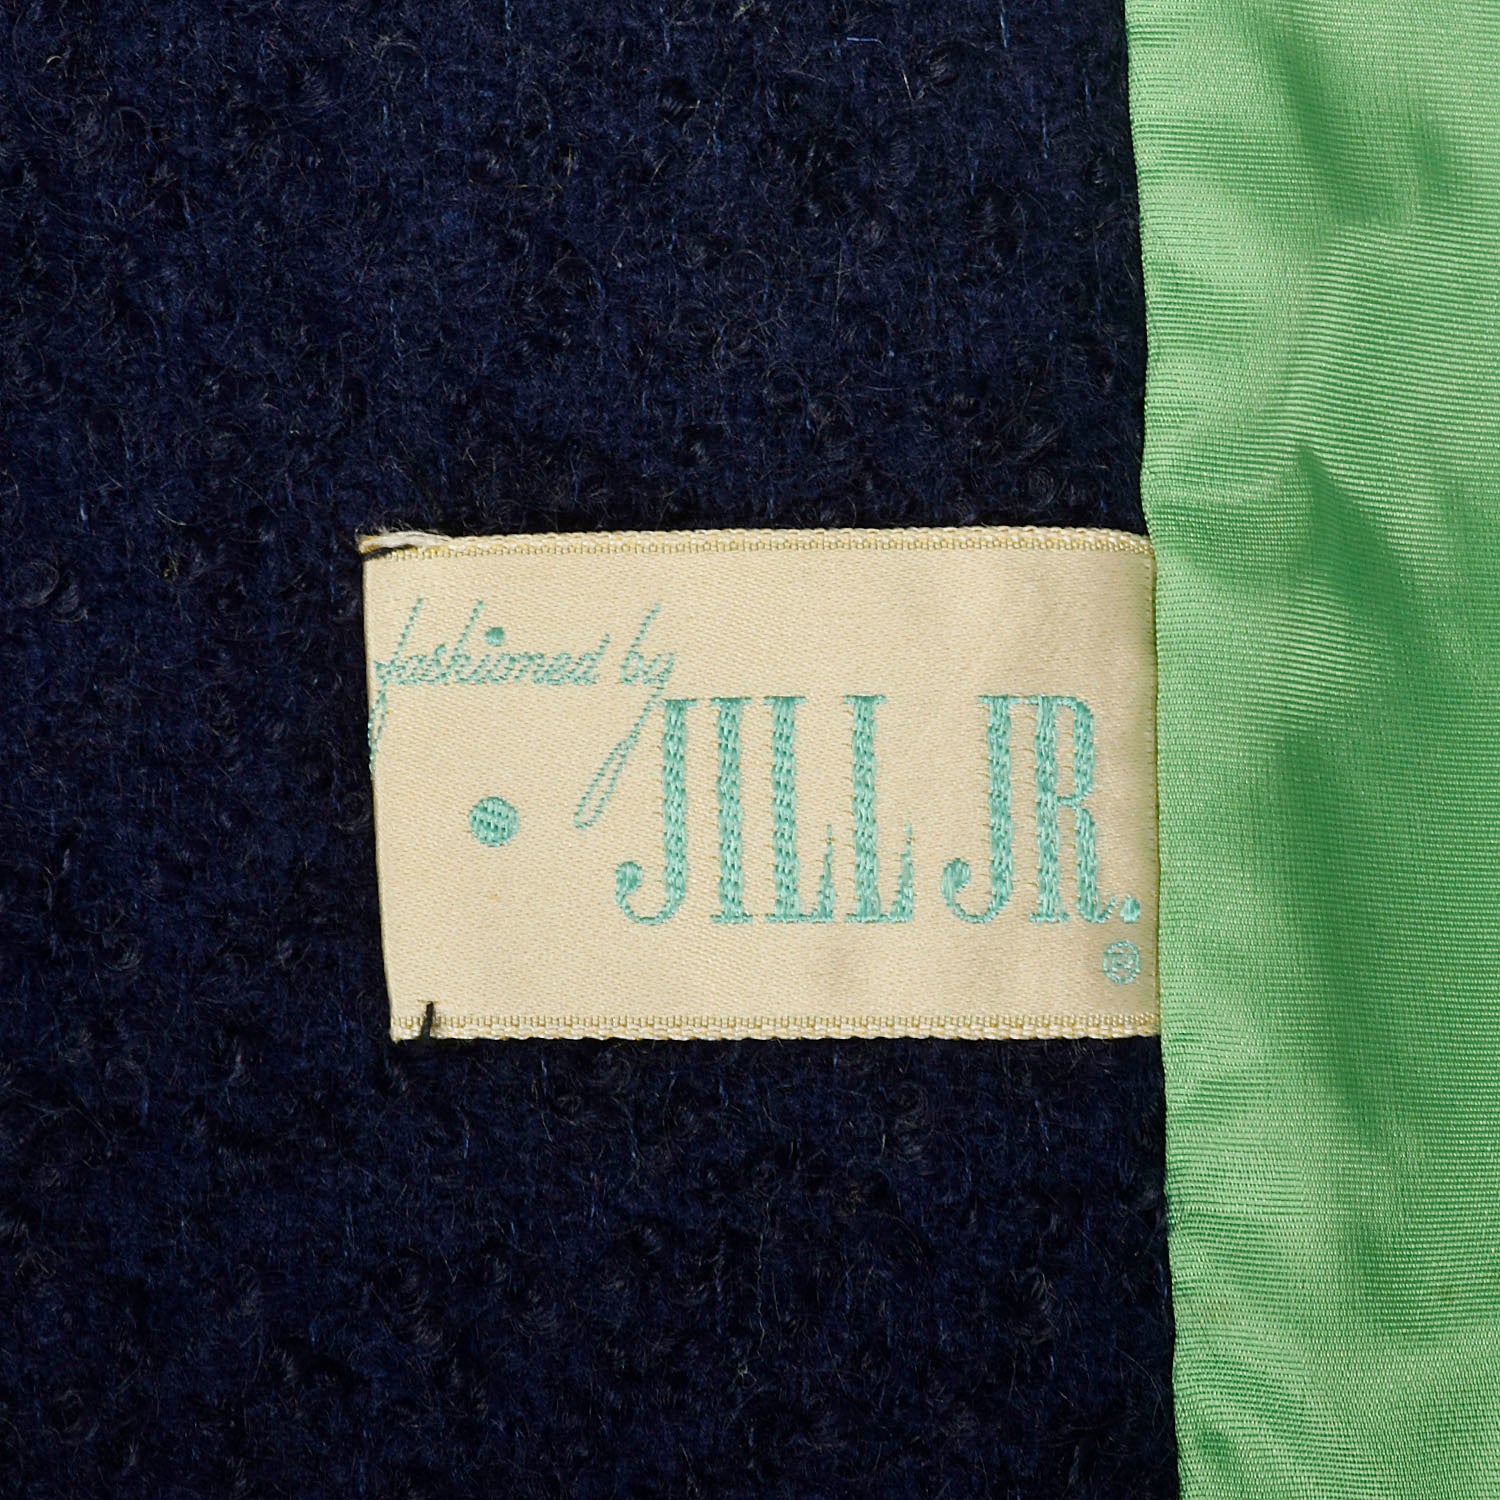 Small 1960s Wool Coat Navy Blue Mod Collar Green Buttons